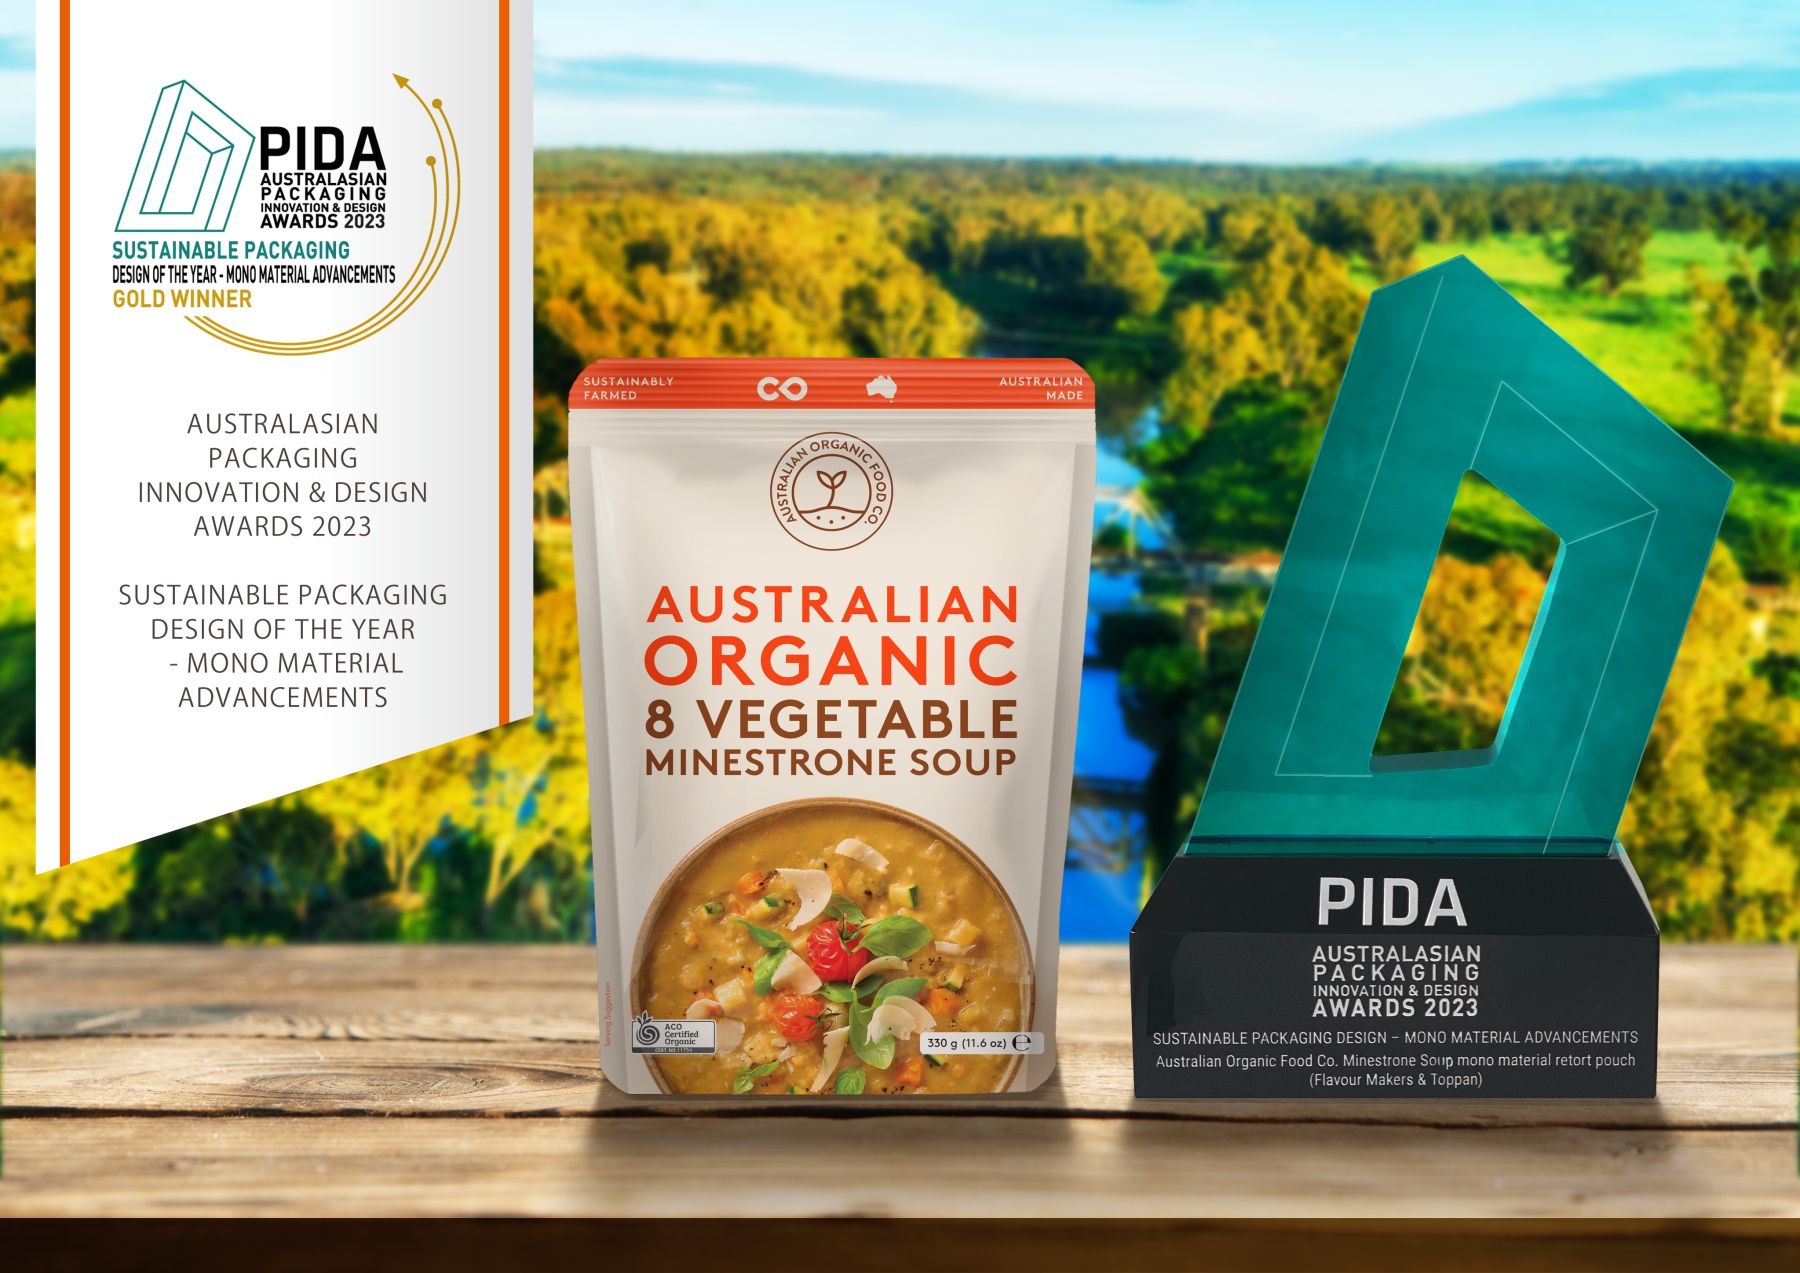 The award-winning Australian Organic Food Co. Minestrone Soup